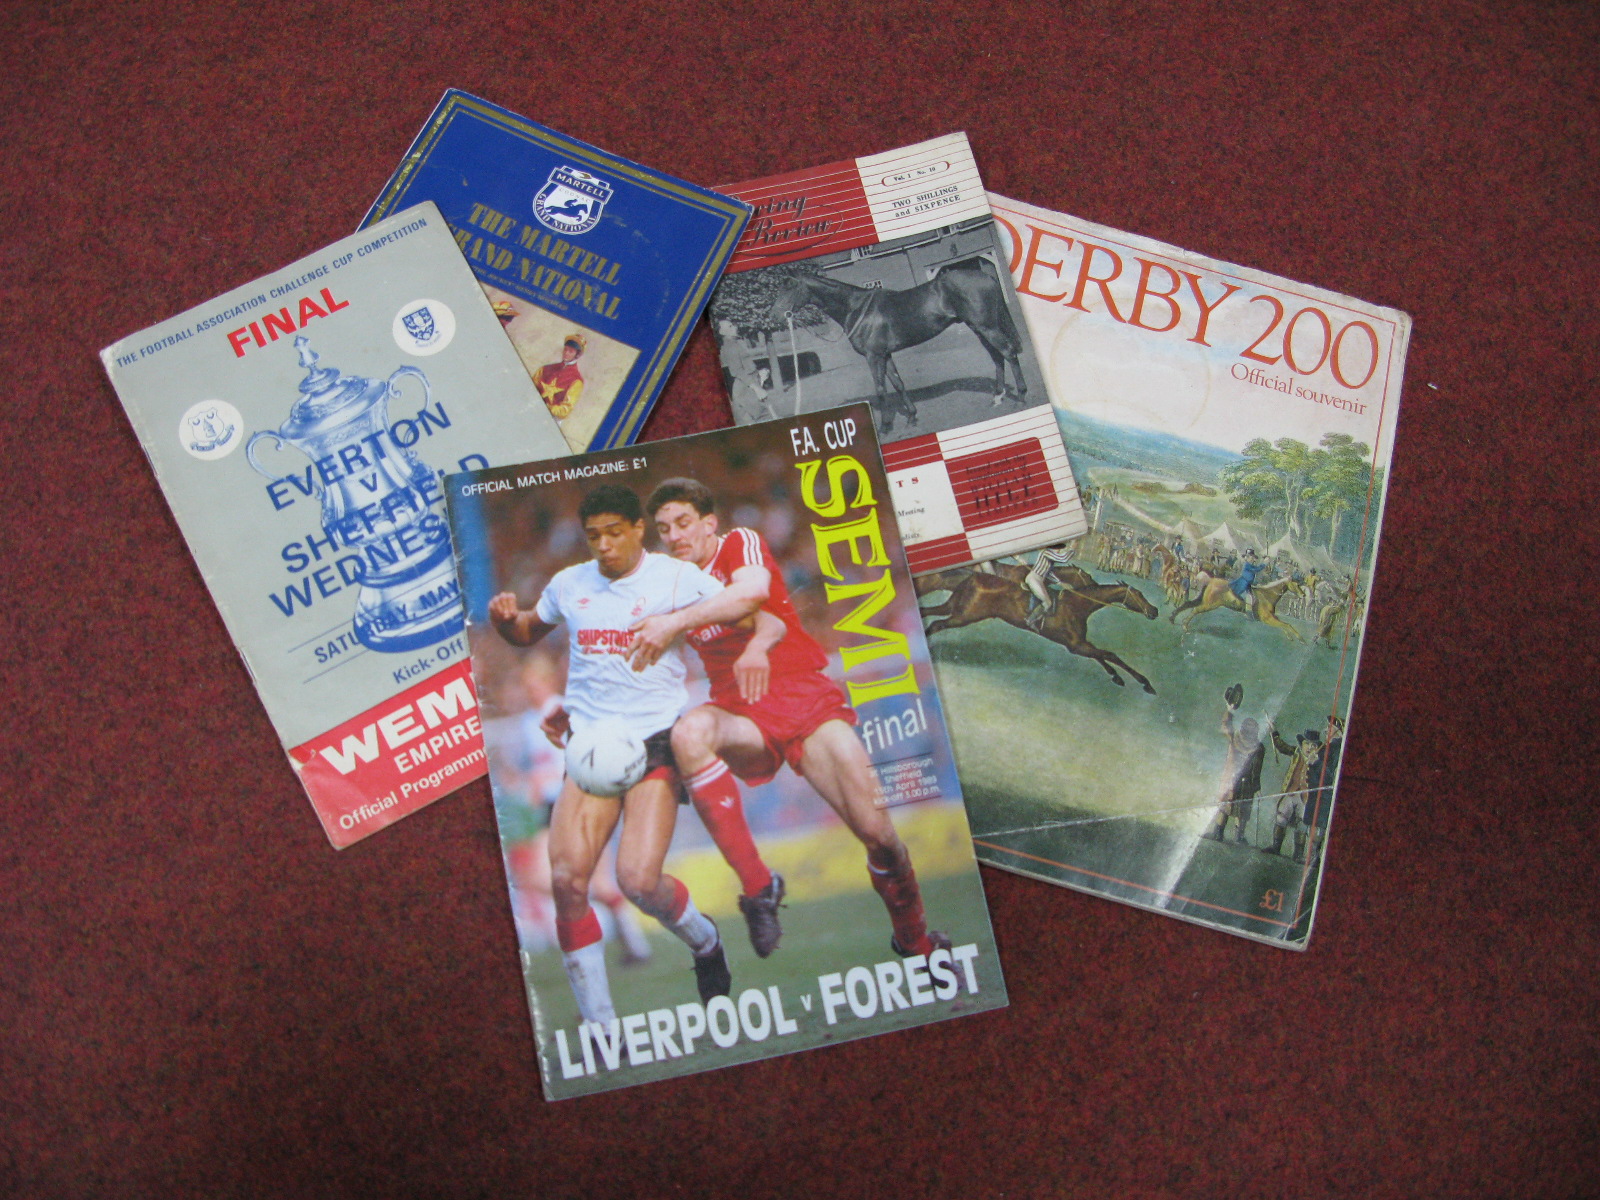 1966 FA Cup Final Programme, 89 Hillsborough semi, Derby 2000 Official Souvenir, 95 Grand National